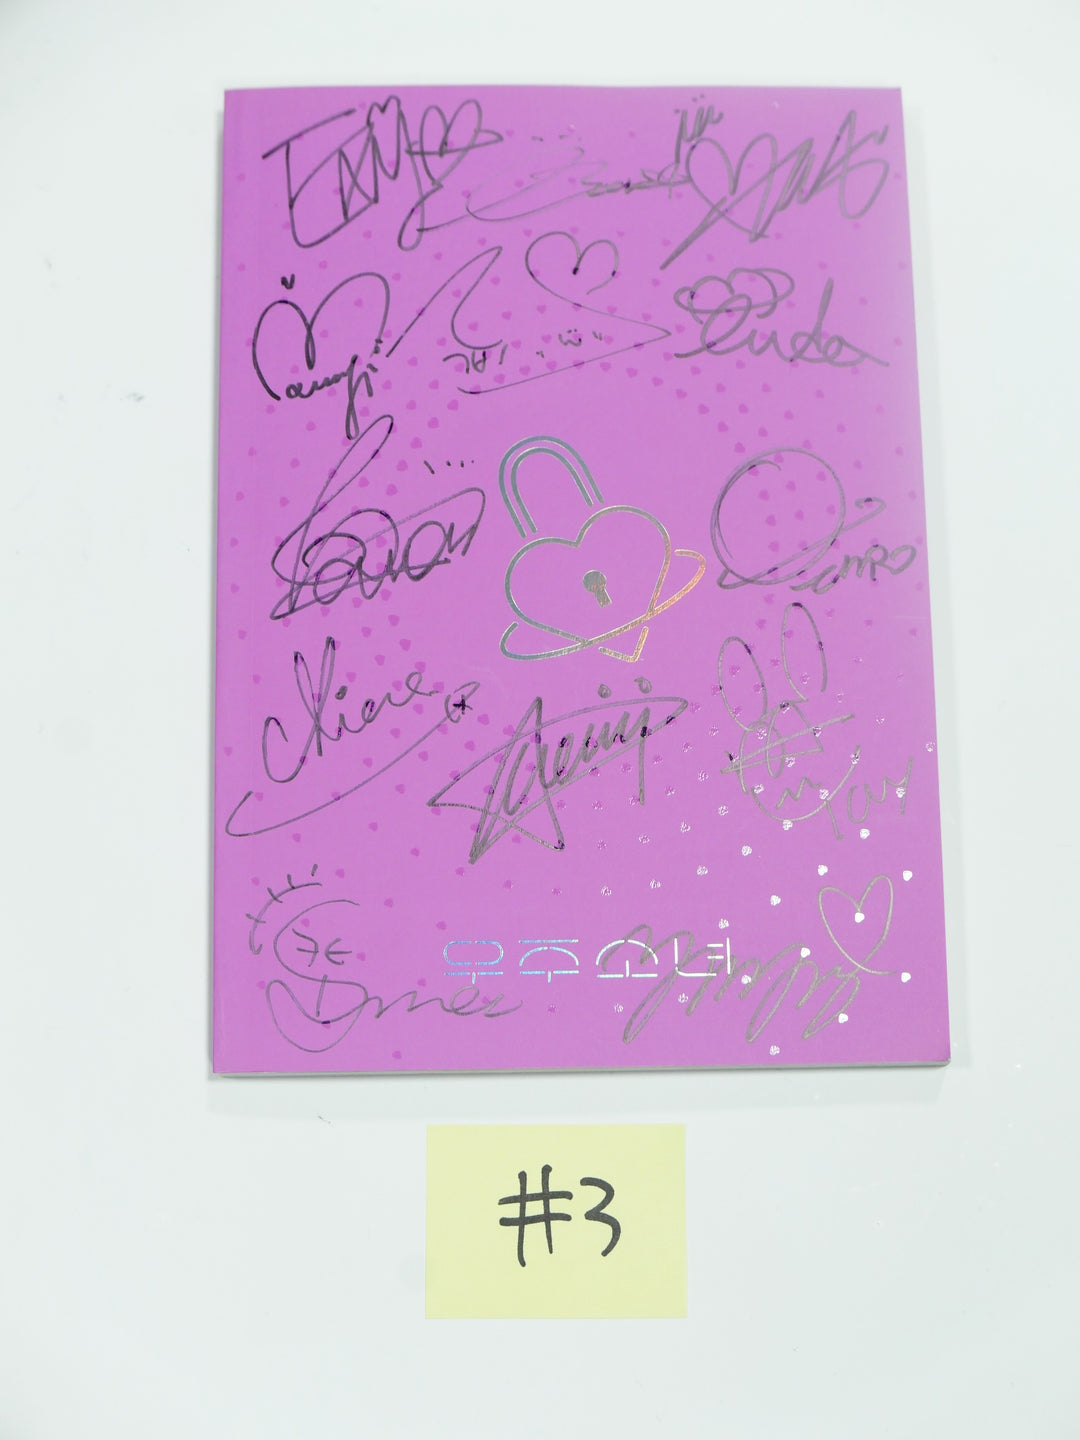 WJSN, Mamamoo, GFriend - Hand Autographed(Signed) Promo Album (OLD)